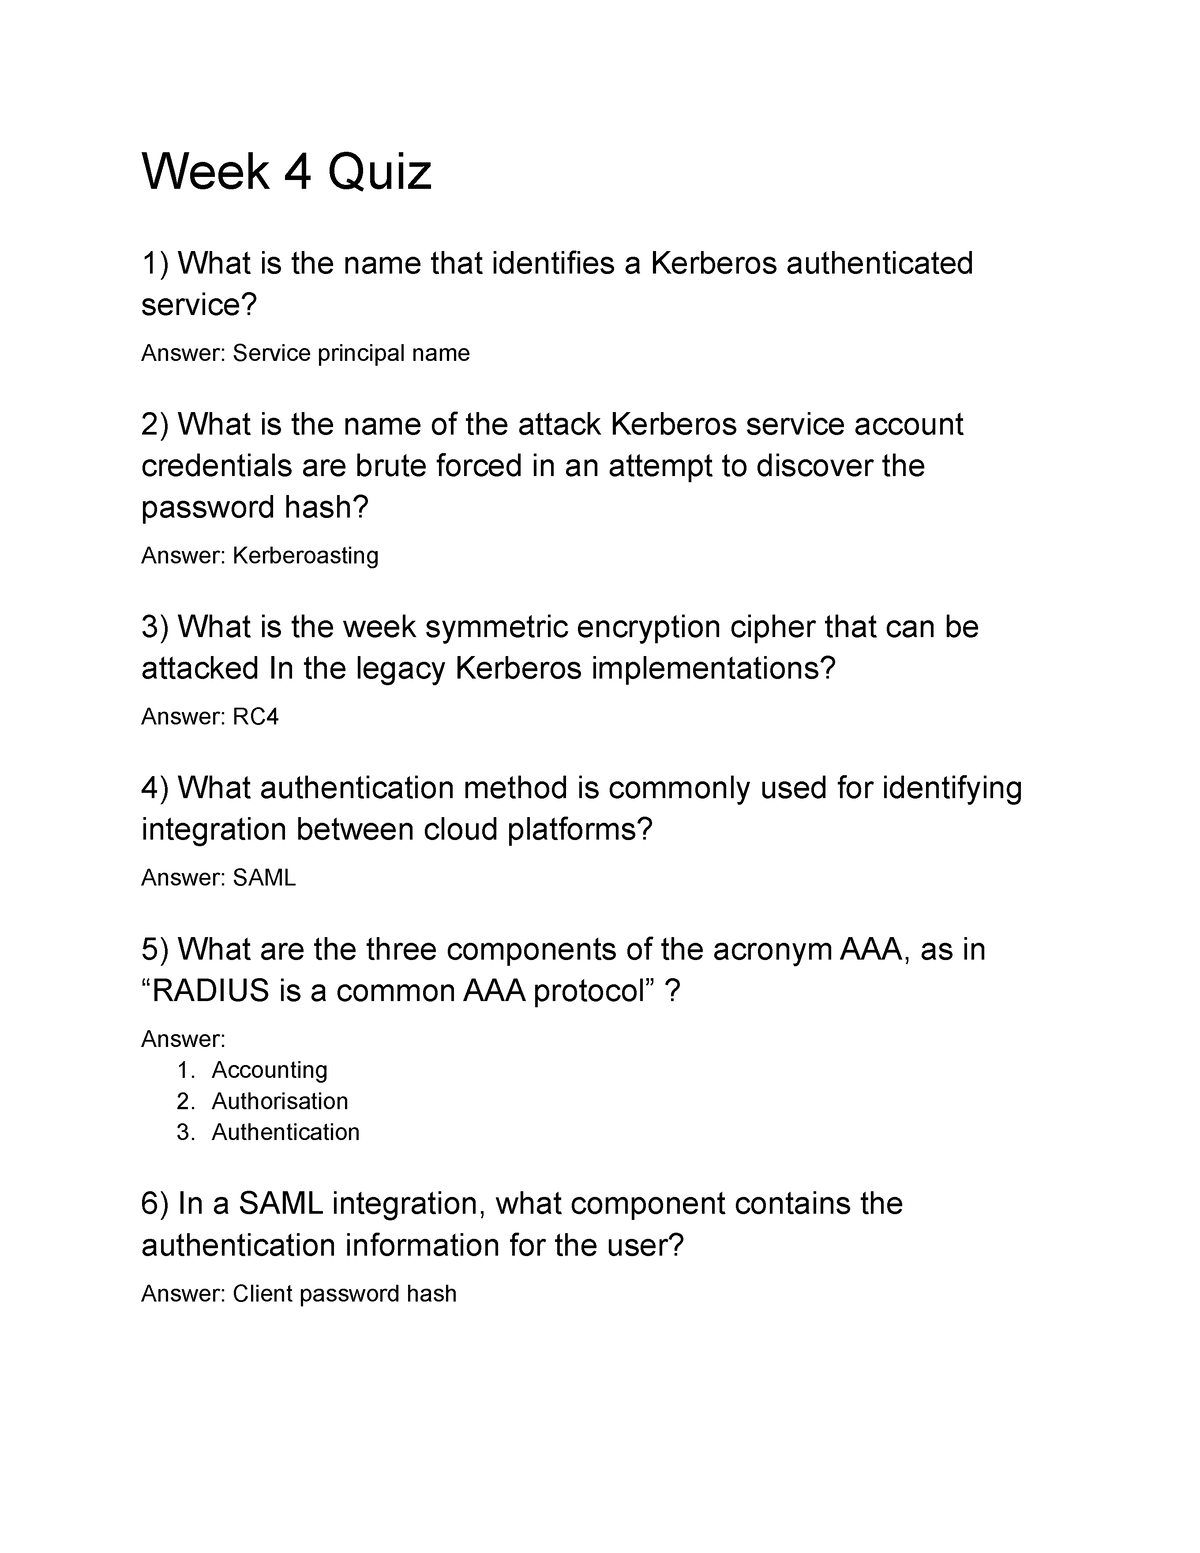 assignment quiz module 12 authentication